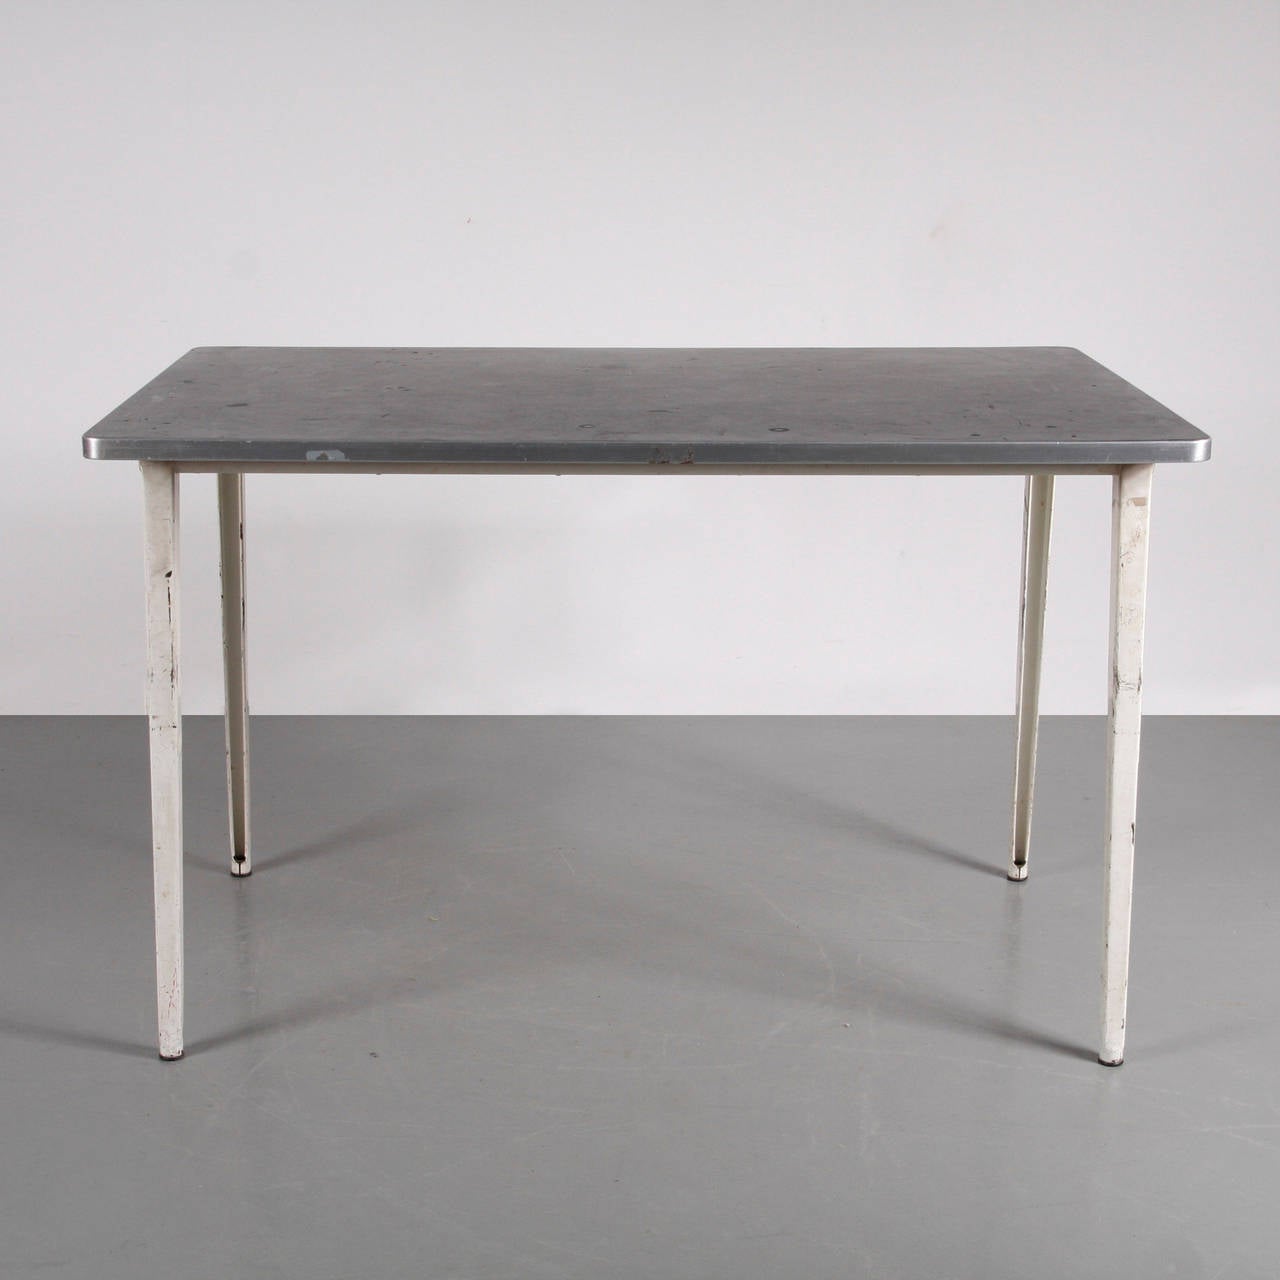 Table, model reform, designed by Friso Kramer, circa 1950.
Manufactured by De Cirkel (Netherlands)
Enamelled folded sheet metal frame in excellent original condition.

Winner of the prestigious Signe D'Or award in 1960.

Literarure: Friso